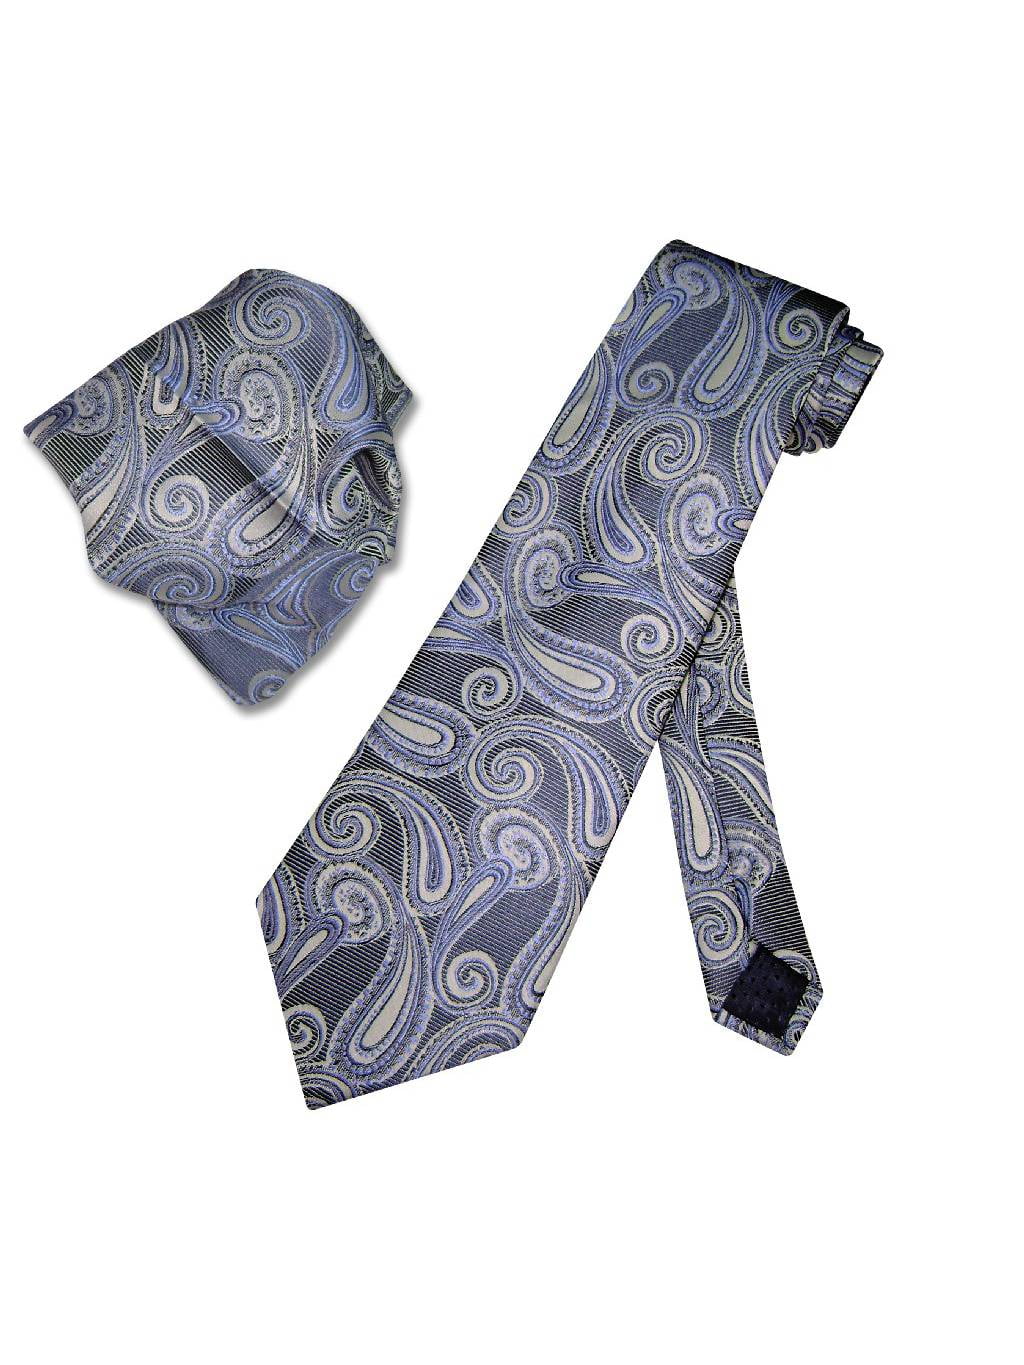 MENDENG Men Black Green Paisley Silk Necktie Ties Handkerchief 2 Pieces Tie Sets